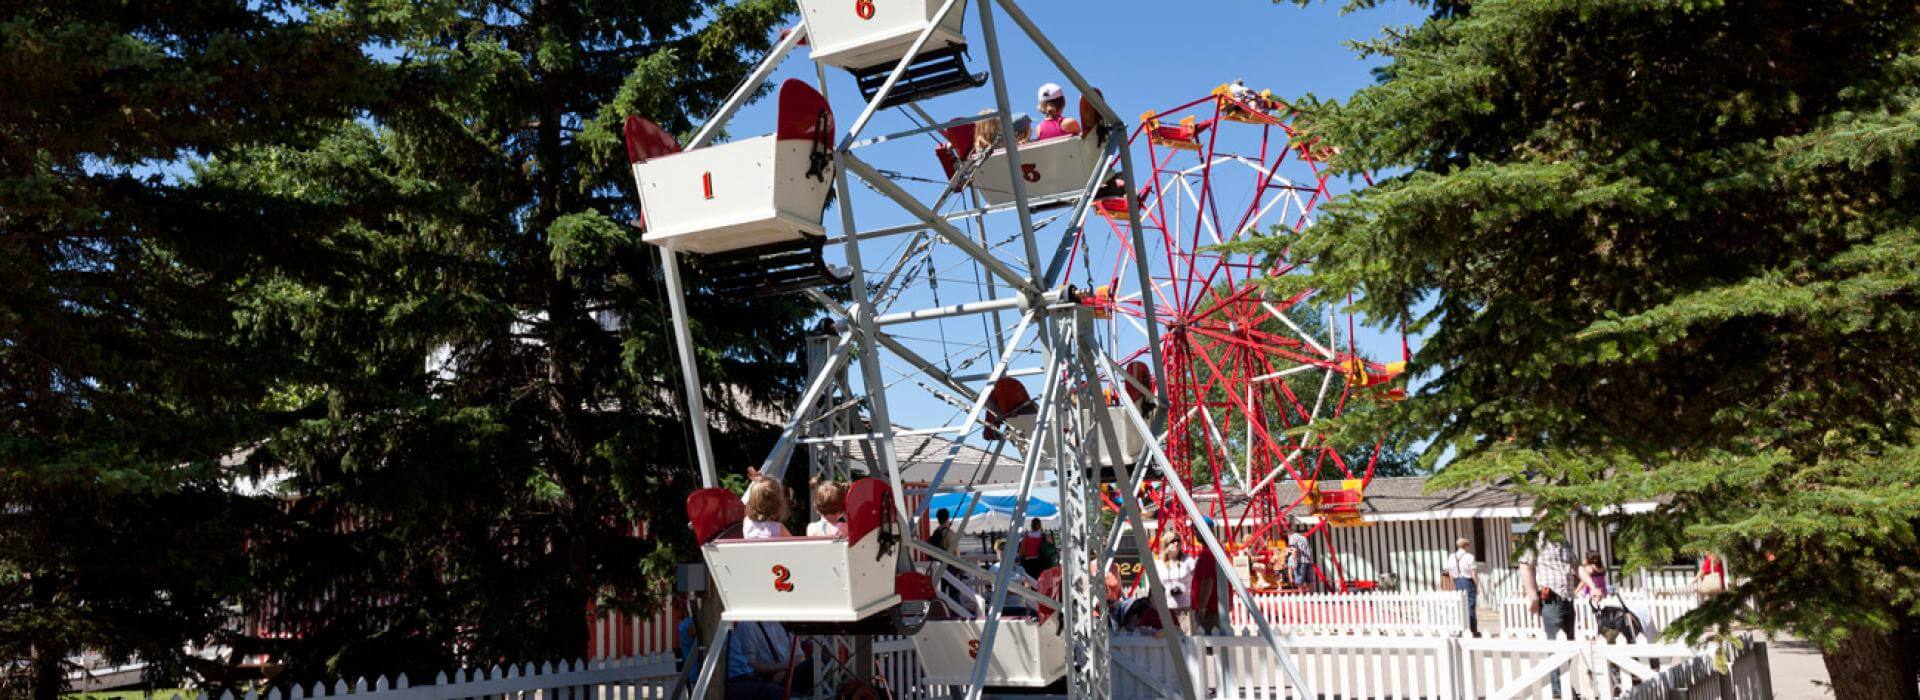 child Ferris wheel in an amusement park